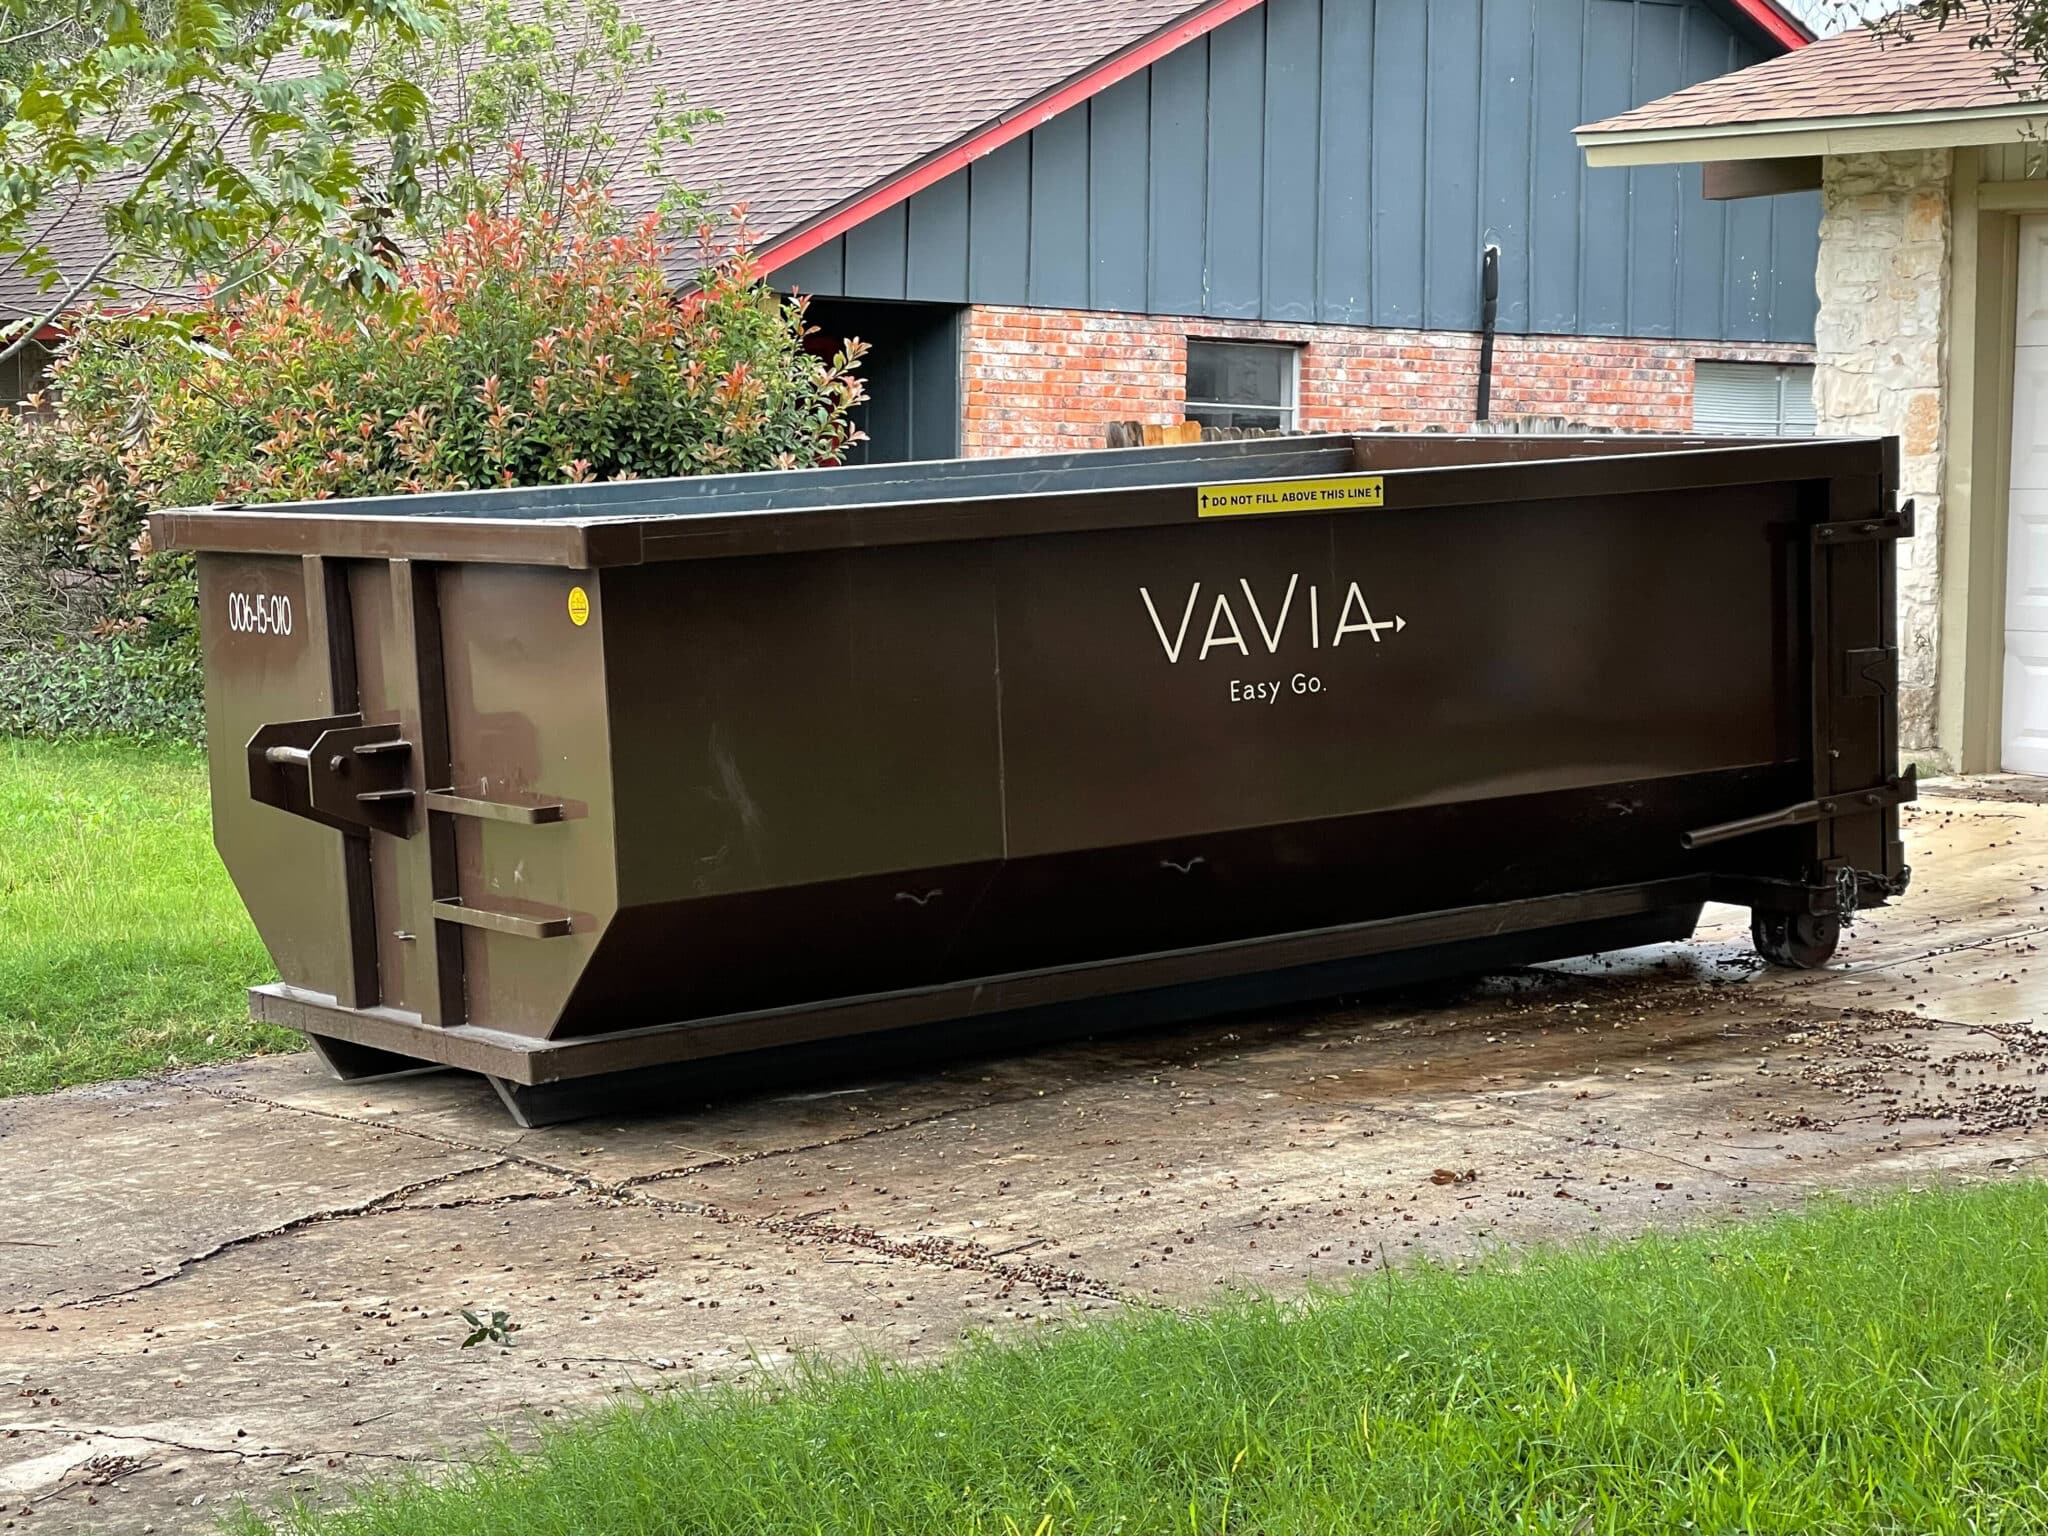 Same Day or Next Day Dumpster Rental Service | VaVia